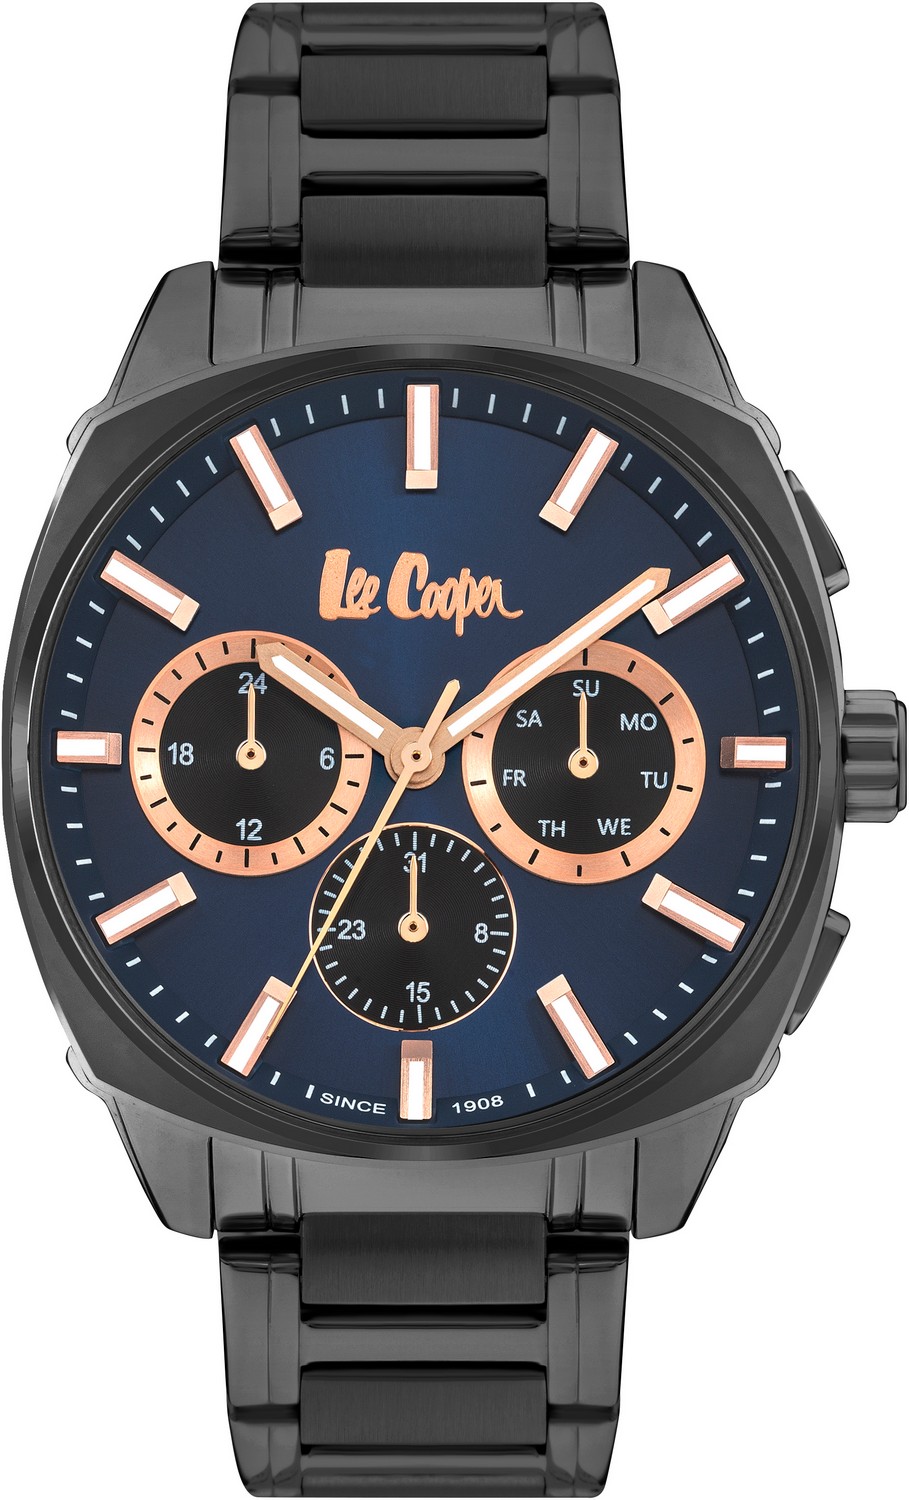 LEE COOPER  Мужские часы, кварцевый механизм, суперметалл с покрытием, 44 мм